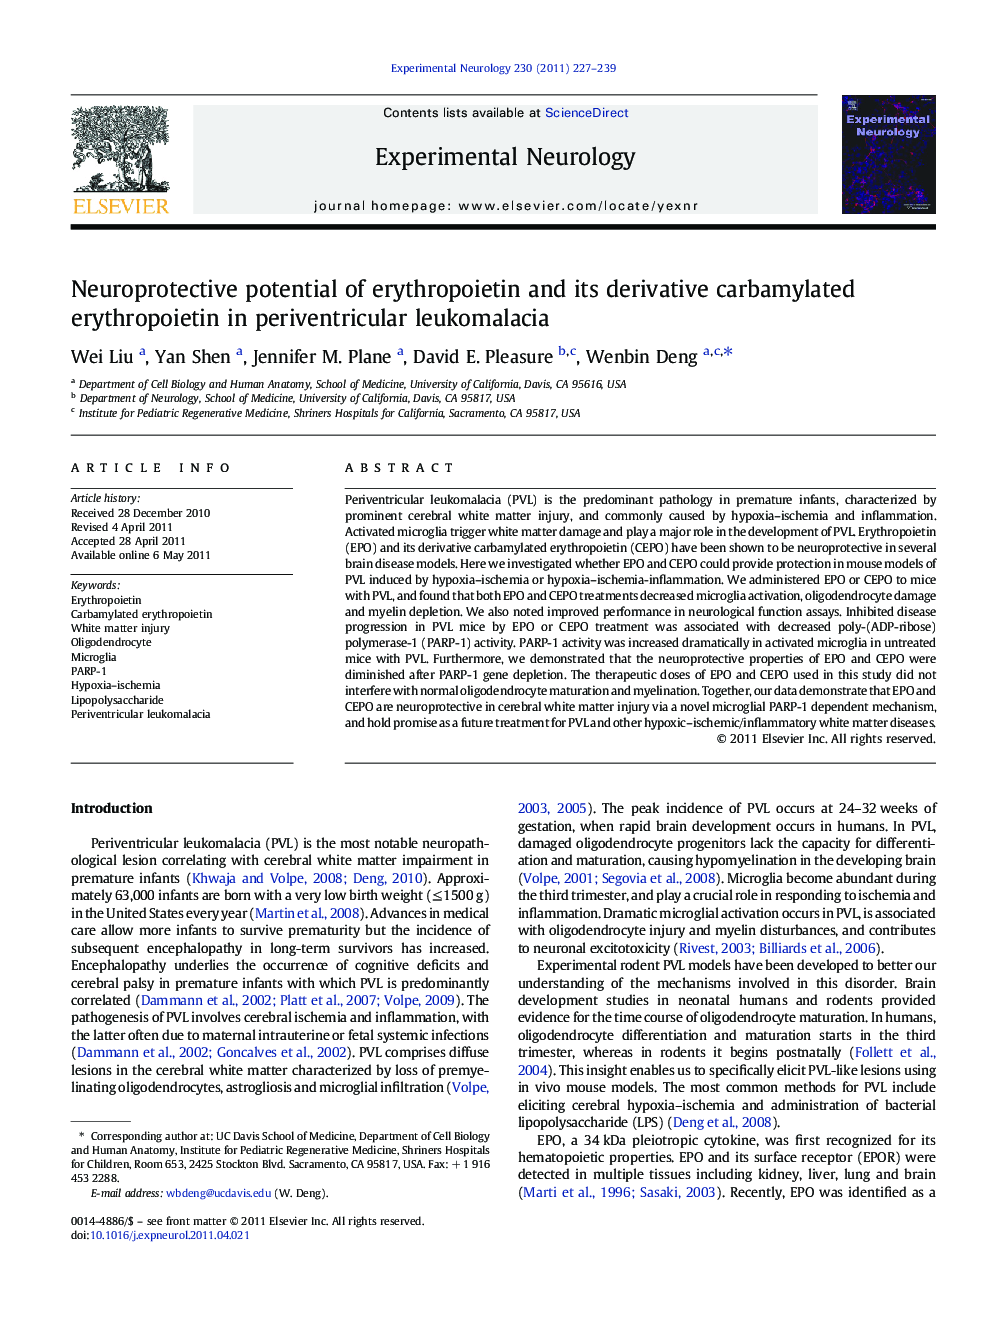 Neuroprotective potential of erythropoietin and its derivative carbamylated erythropoietin in periventricular leukomalacia